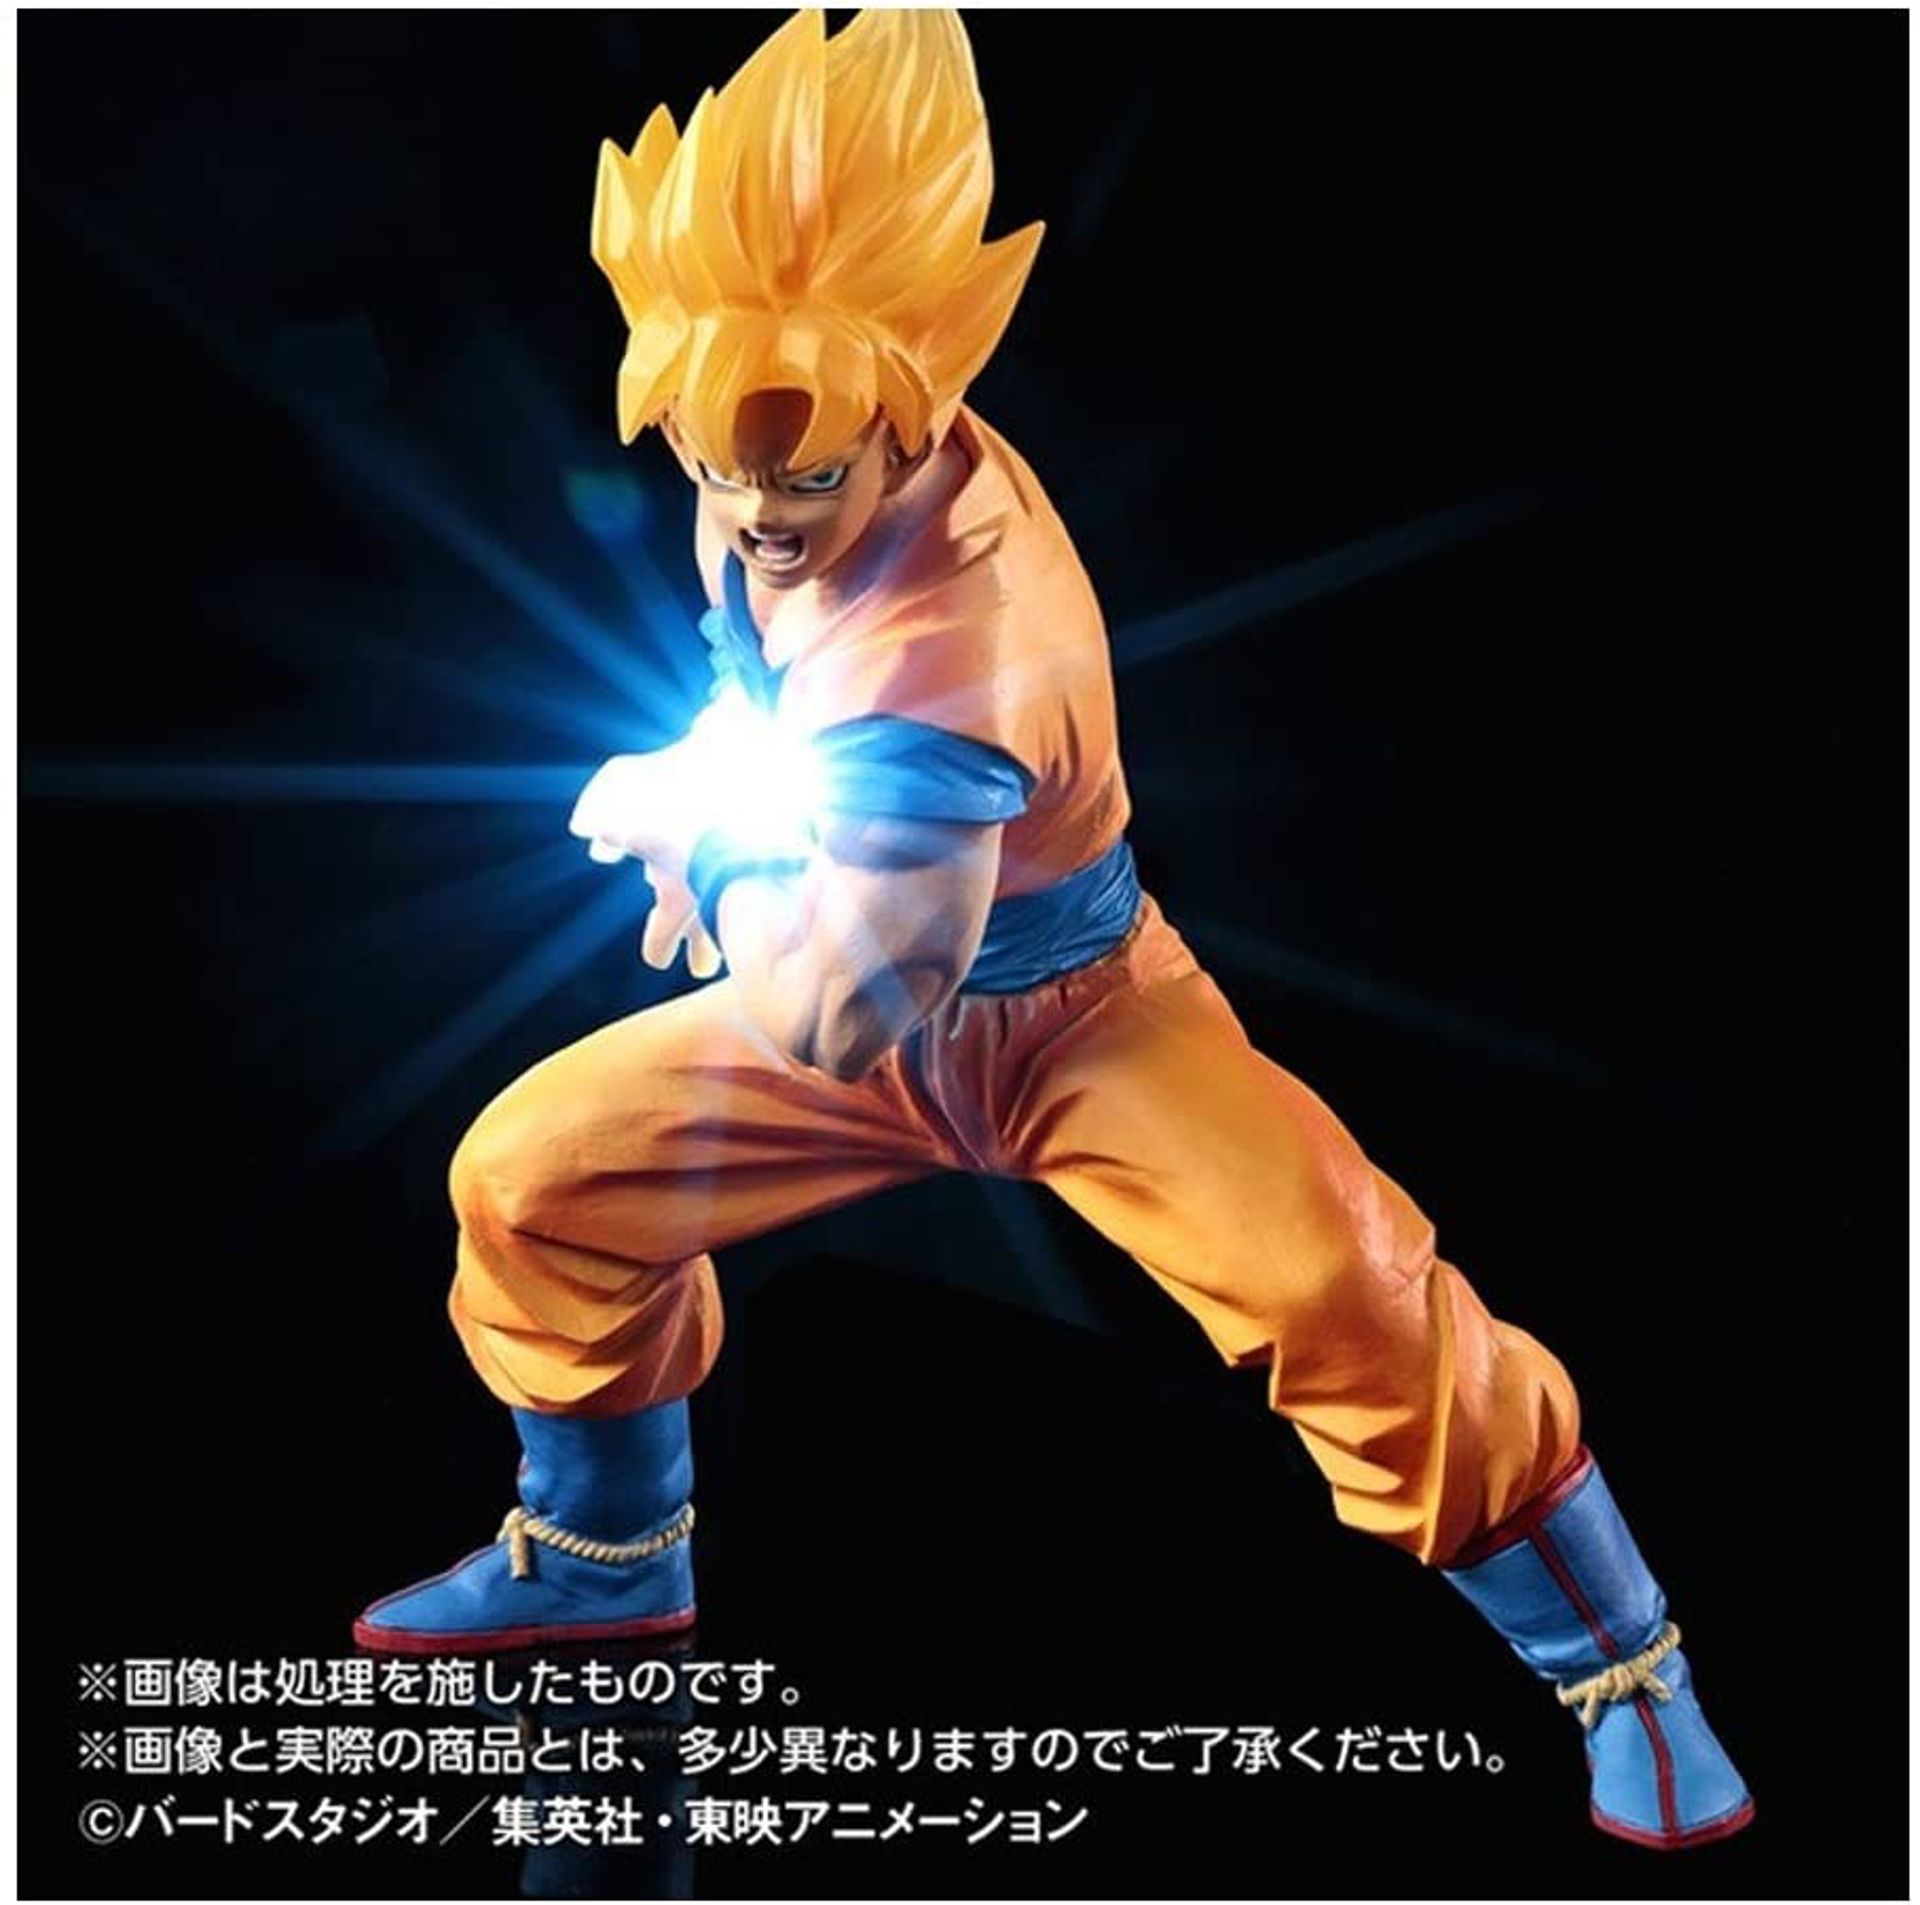 Acheter Dragon Ball Z - HG Luminous Super Saiyan Goku Kamehameha (LED) F -  Figurines prix promo neuf et occasion pas cher